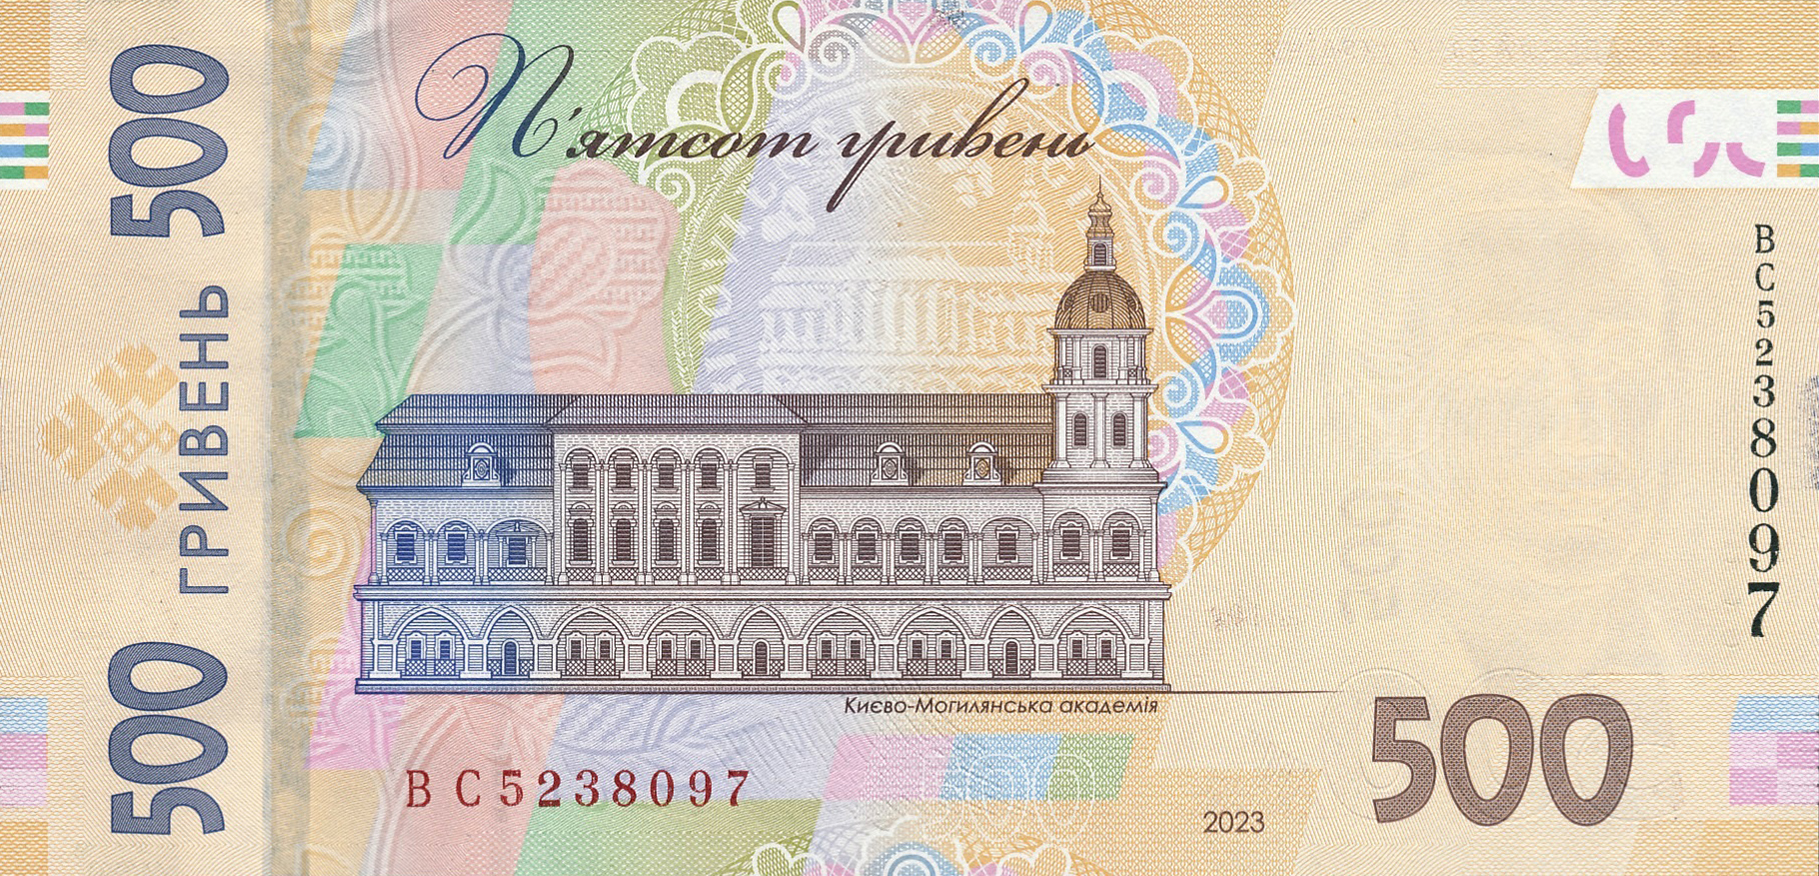 Ukraine new sig/date (2023) 500-hryvnia note (B858d) confirmed ...